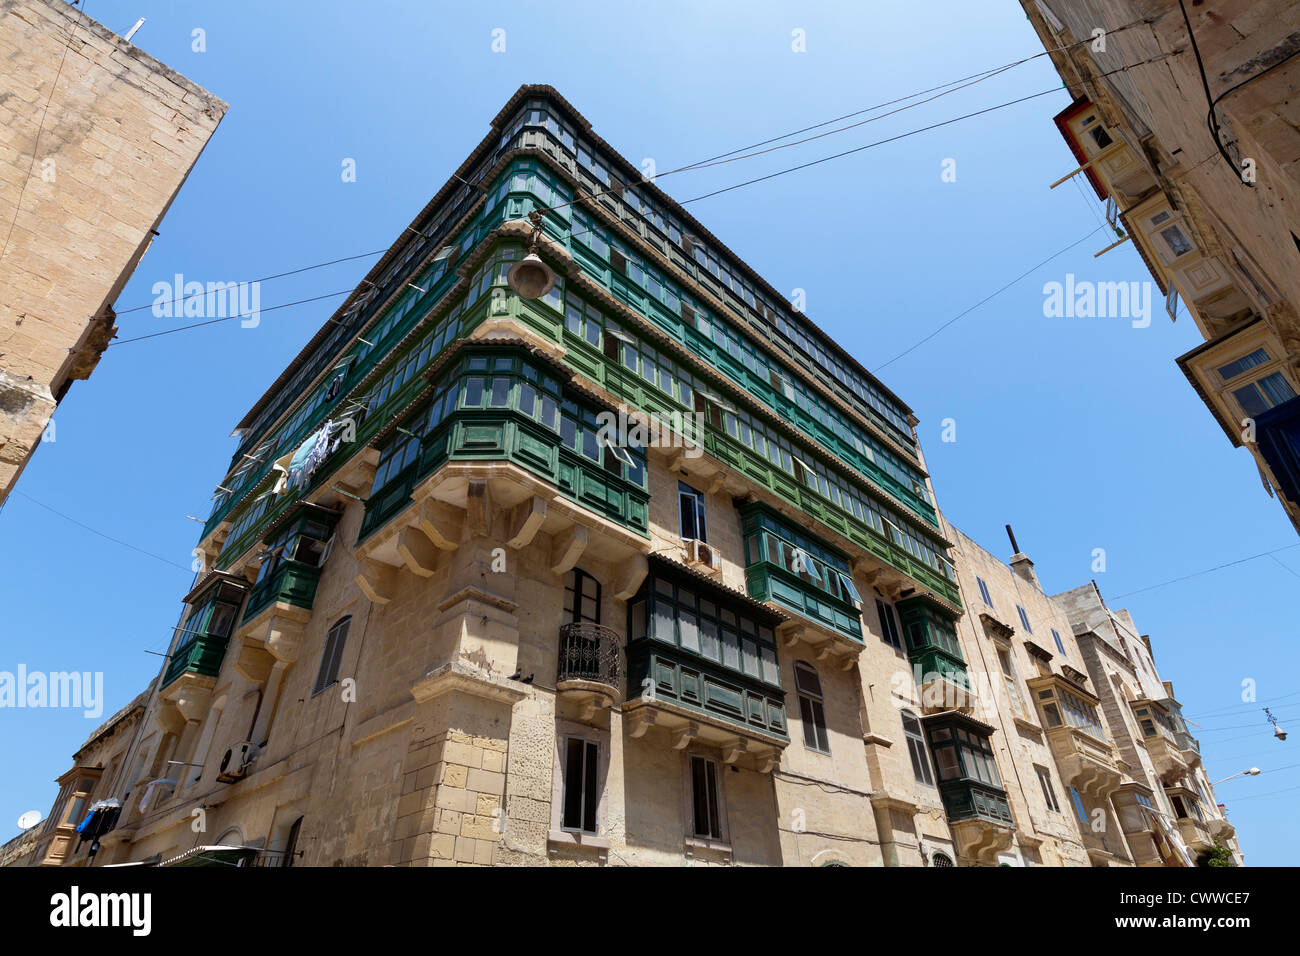 Maltese architecture seen on the streets of the Island of Malta, Mediterranean Sea Stock Photo